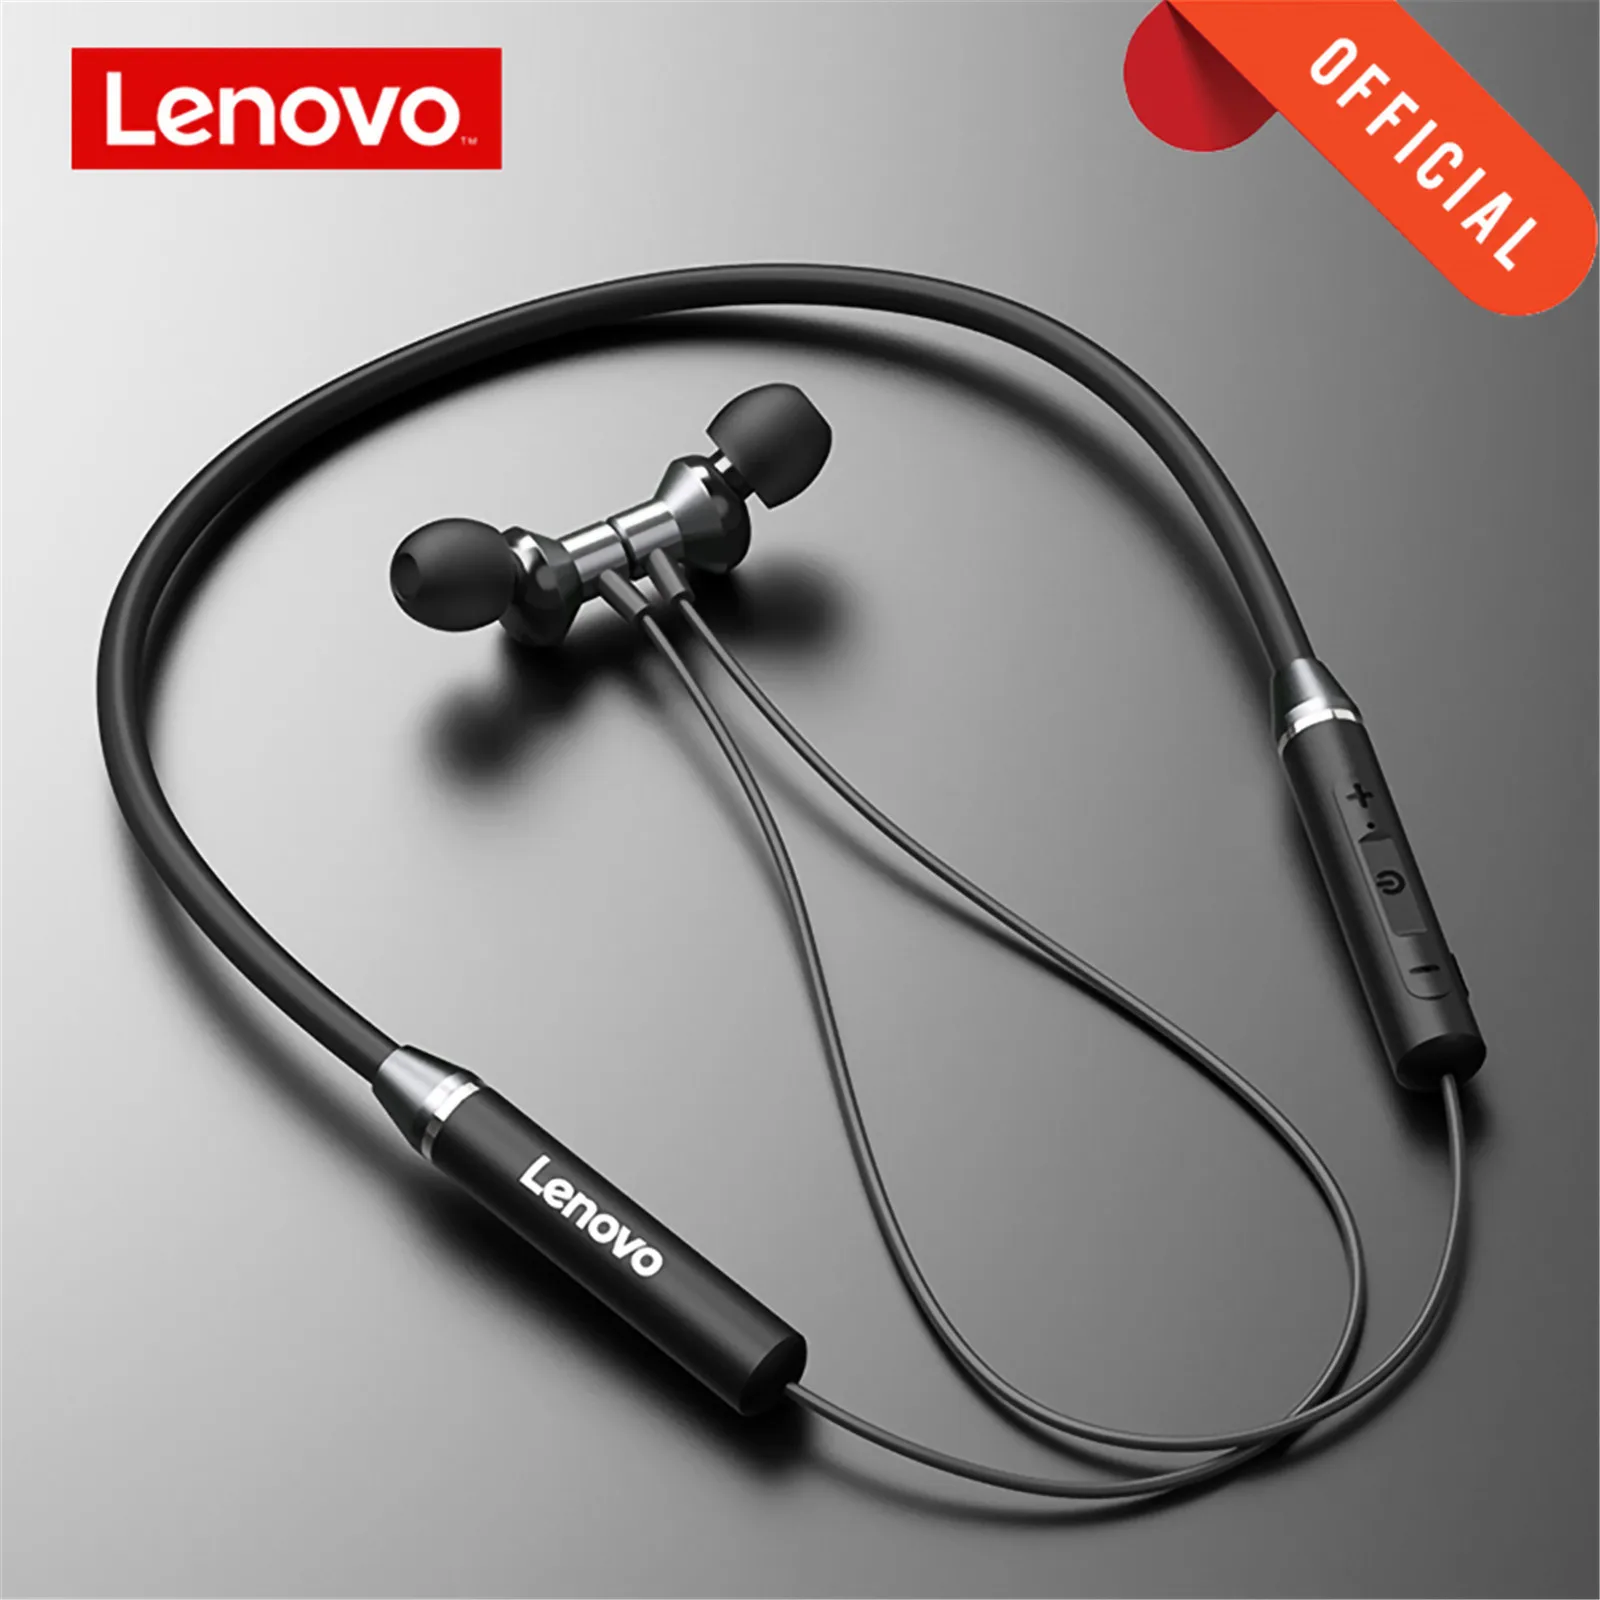 

Lenovo Magnetic Earphone Bluetooth5.0 Wireless Headset Neckband Earphones IPX5 Waterproof Sport Earbud with Noise Cancelling Mic